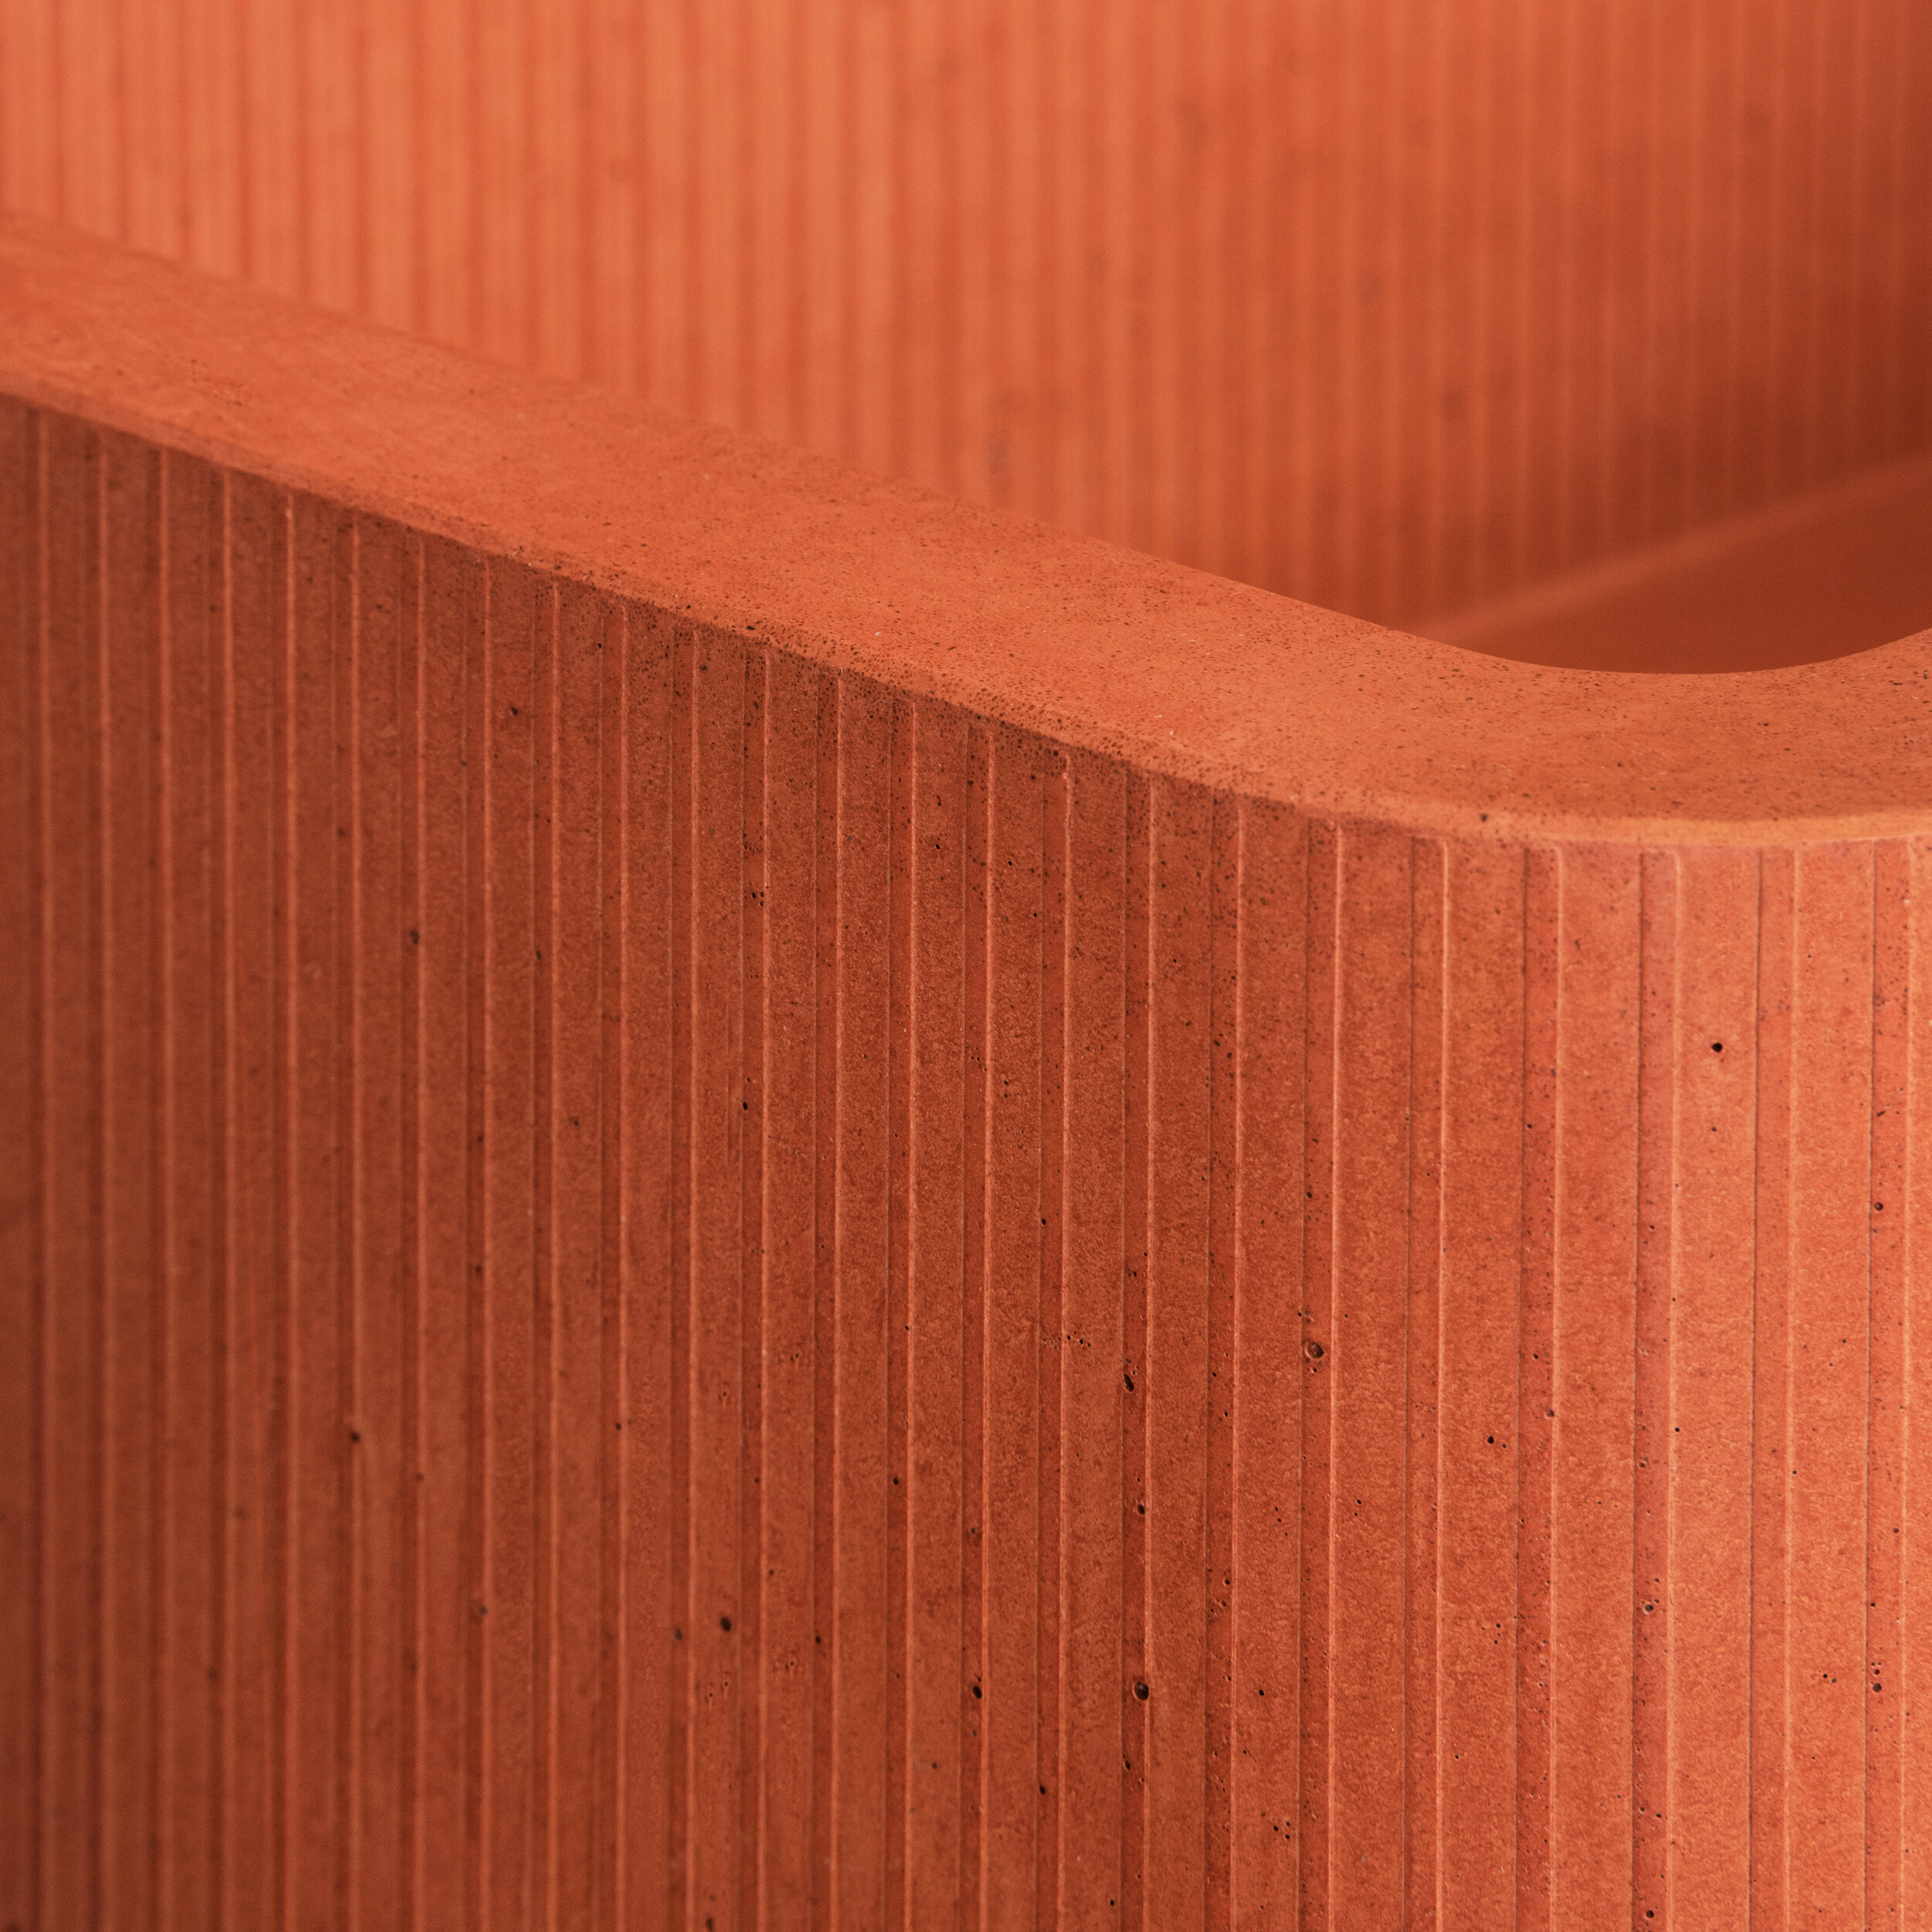 Kast Concrete Basins - Elm Mini - Ember - Close Up Pattern.jpg